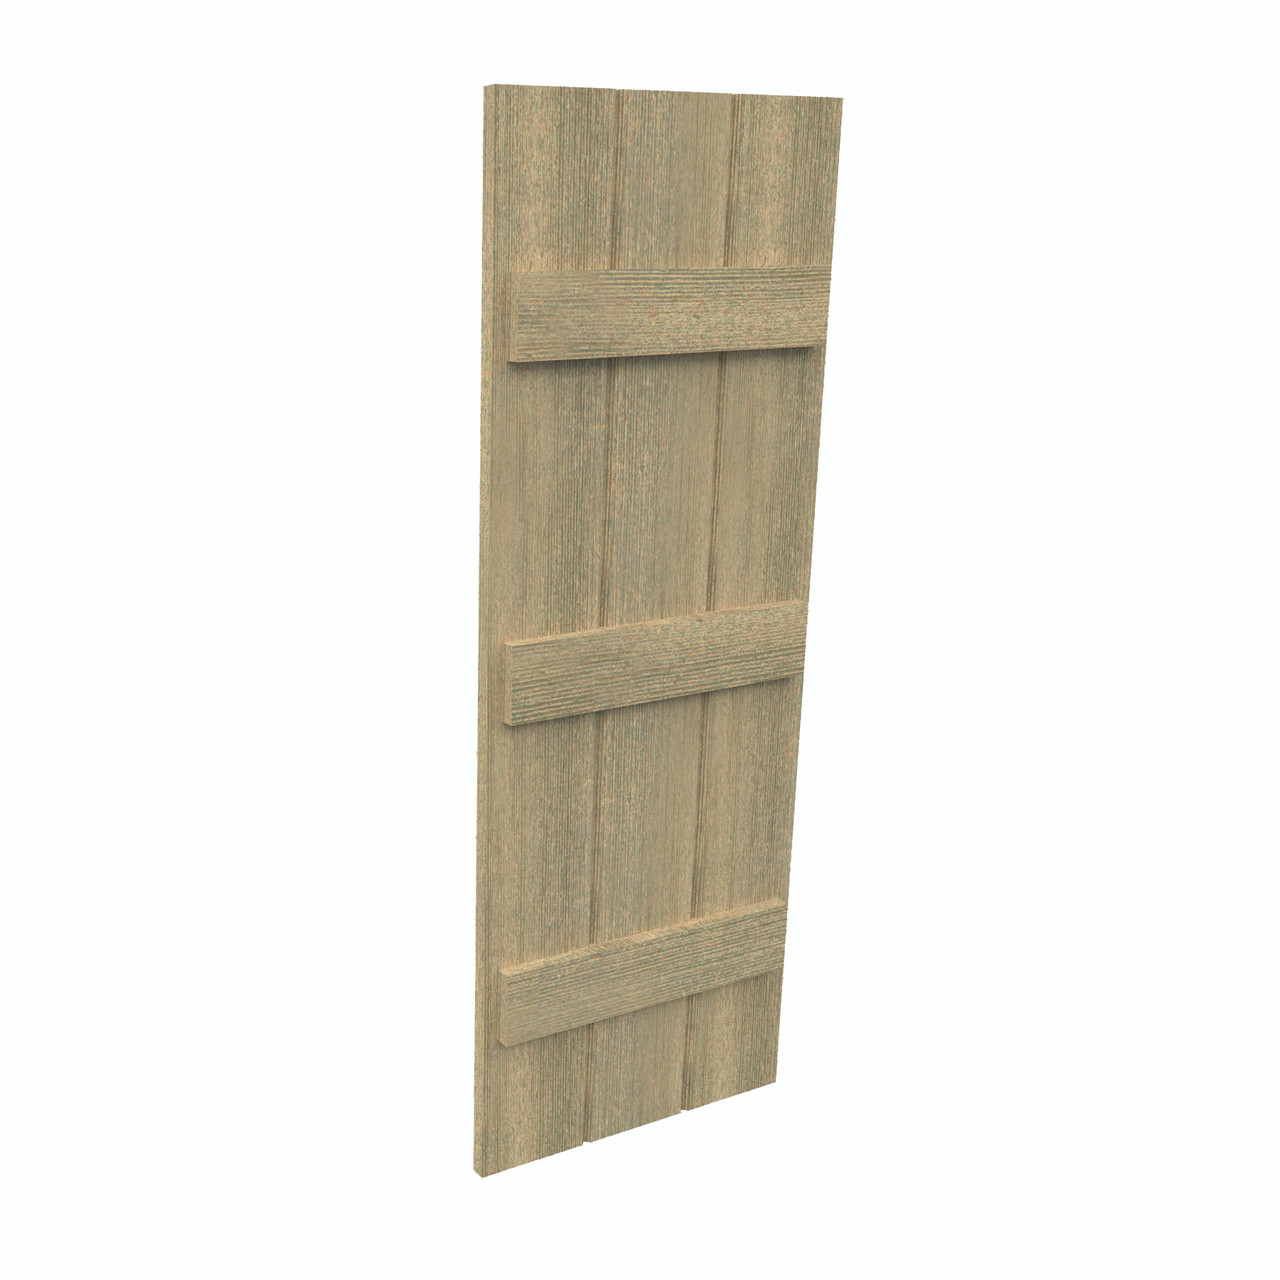 18 inch by 108 inch Plank Shutter with 3-Plank, 3-Batten